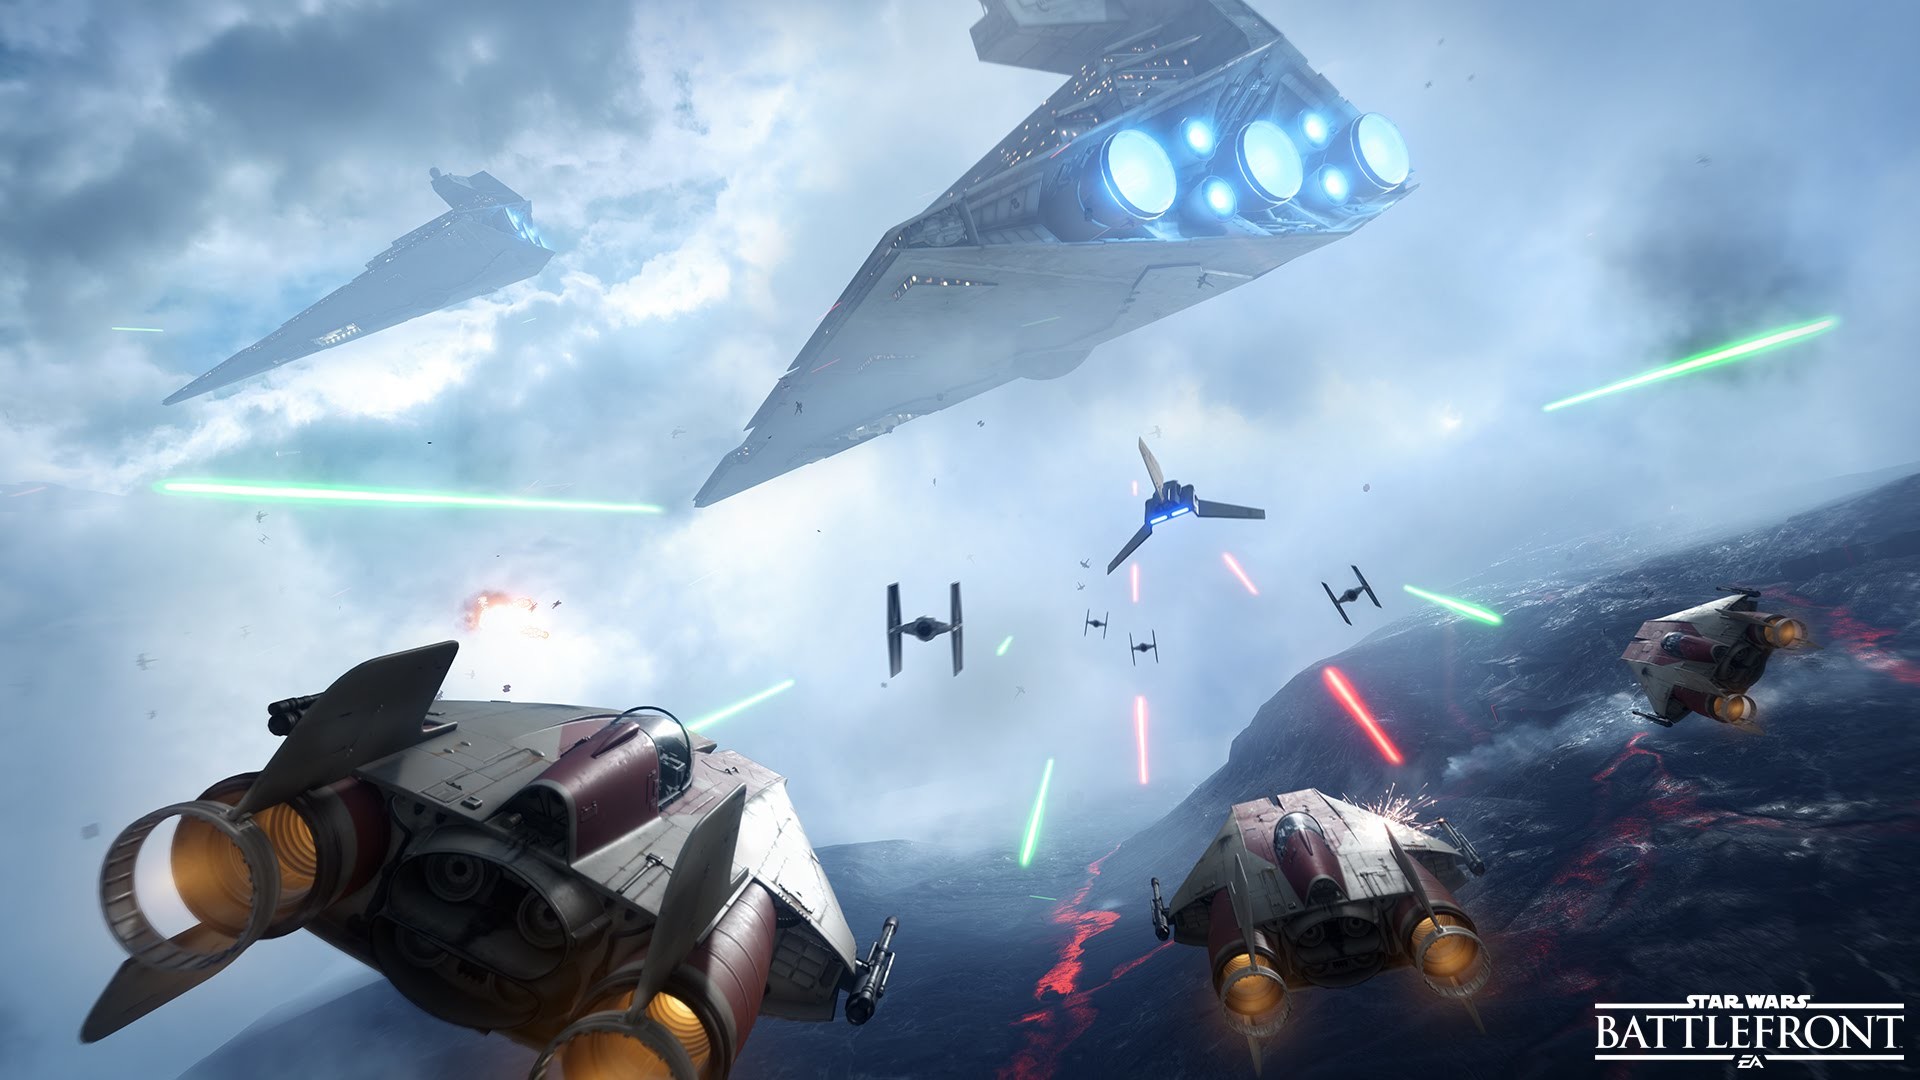 Star Wars Battlefront – Fighter Squadron – Rebel Alliance Gameplay